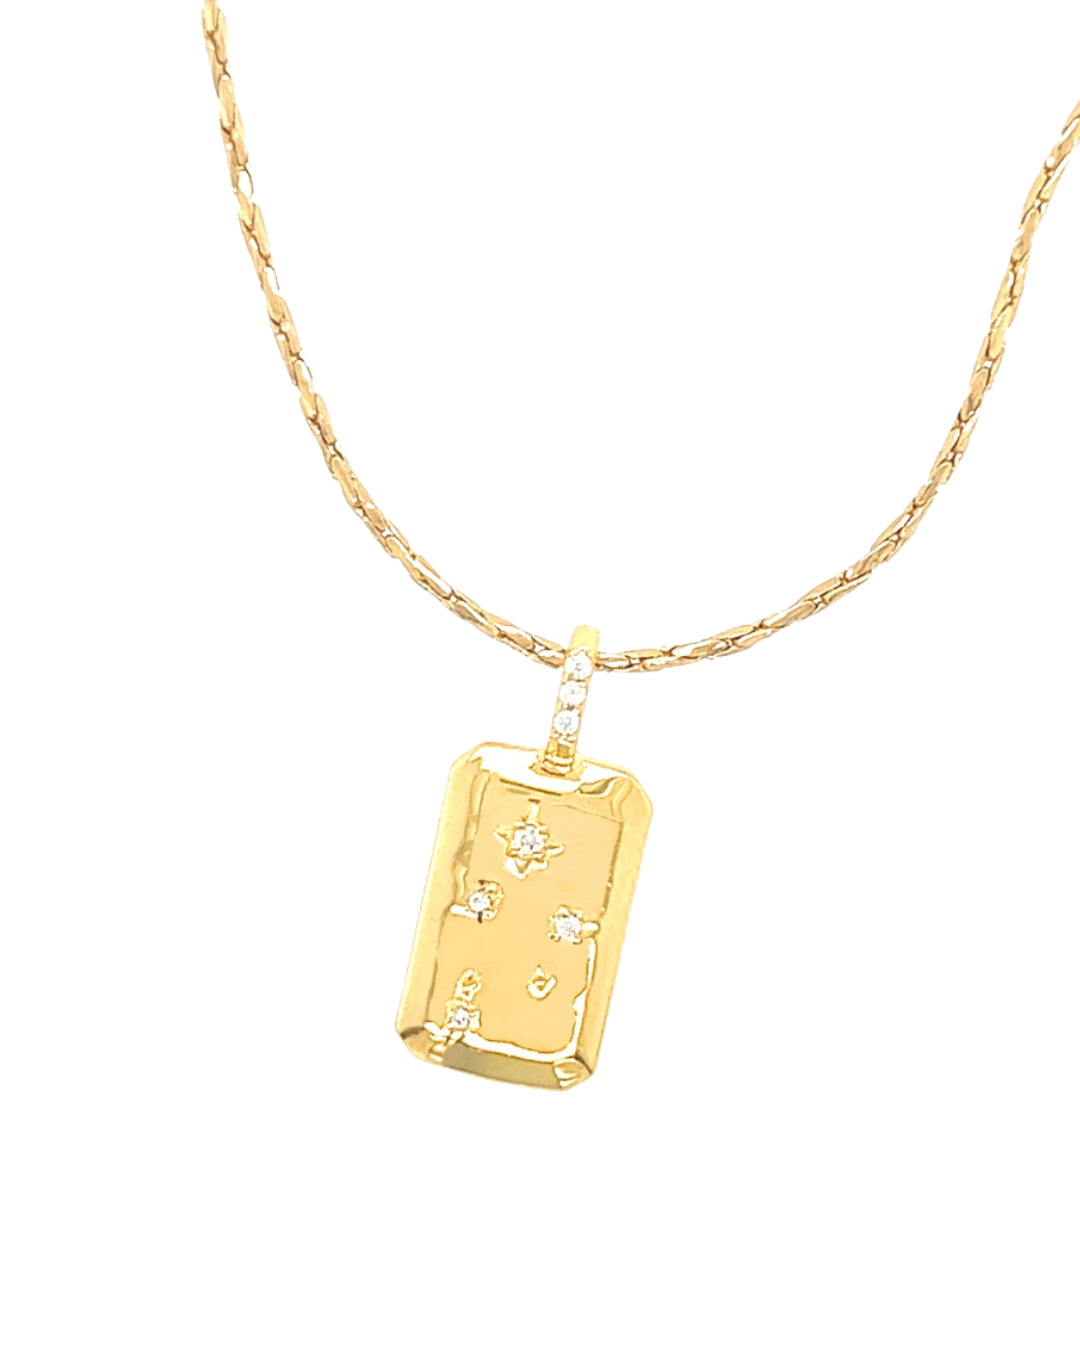 Gold Libra Constellation Zodiac Pendant on a Gold Necklace Chain